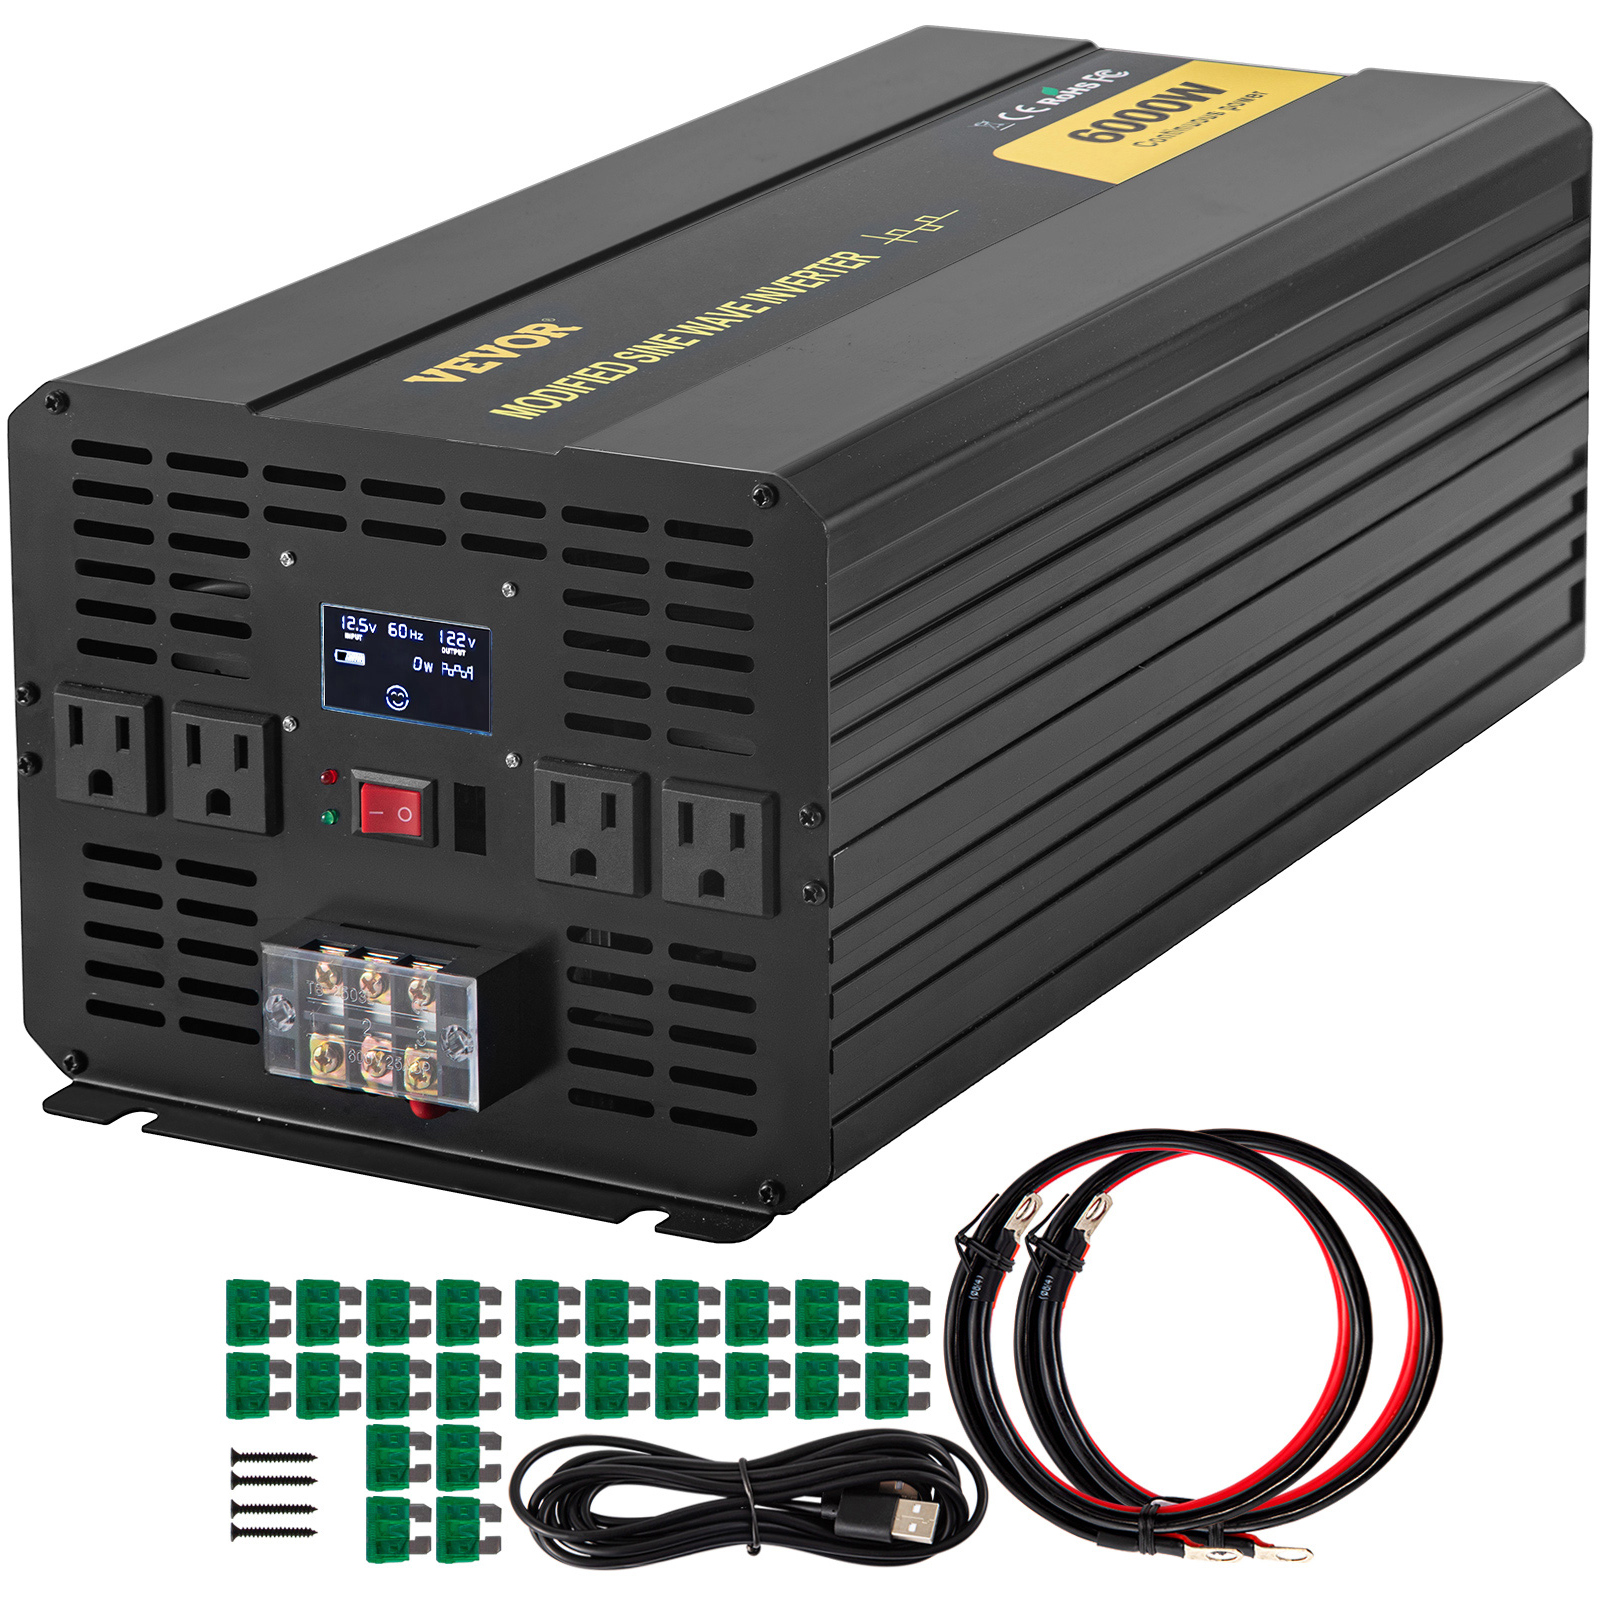 6000W Power Inverter DC 12V to AC 110V Car Sine Wave Converter Modified 2 USB